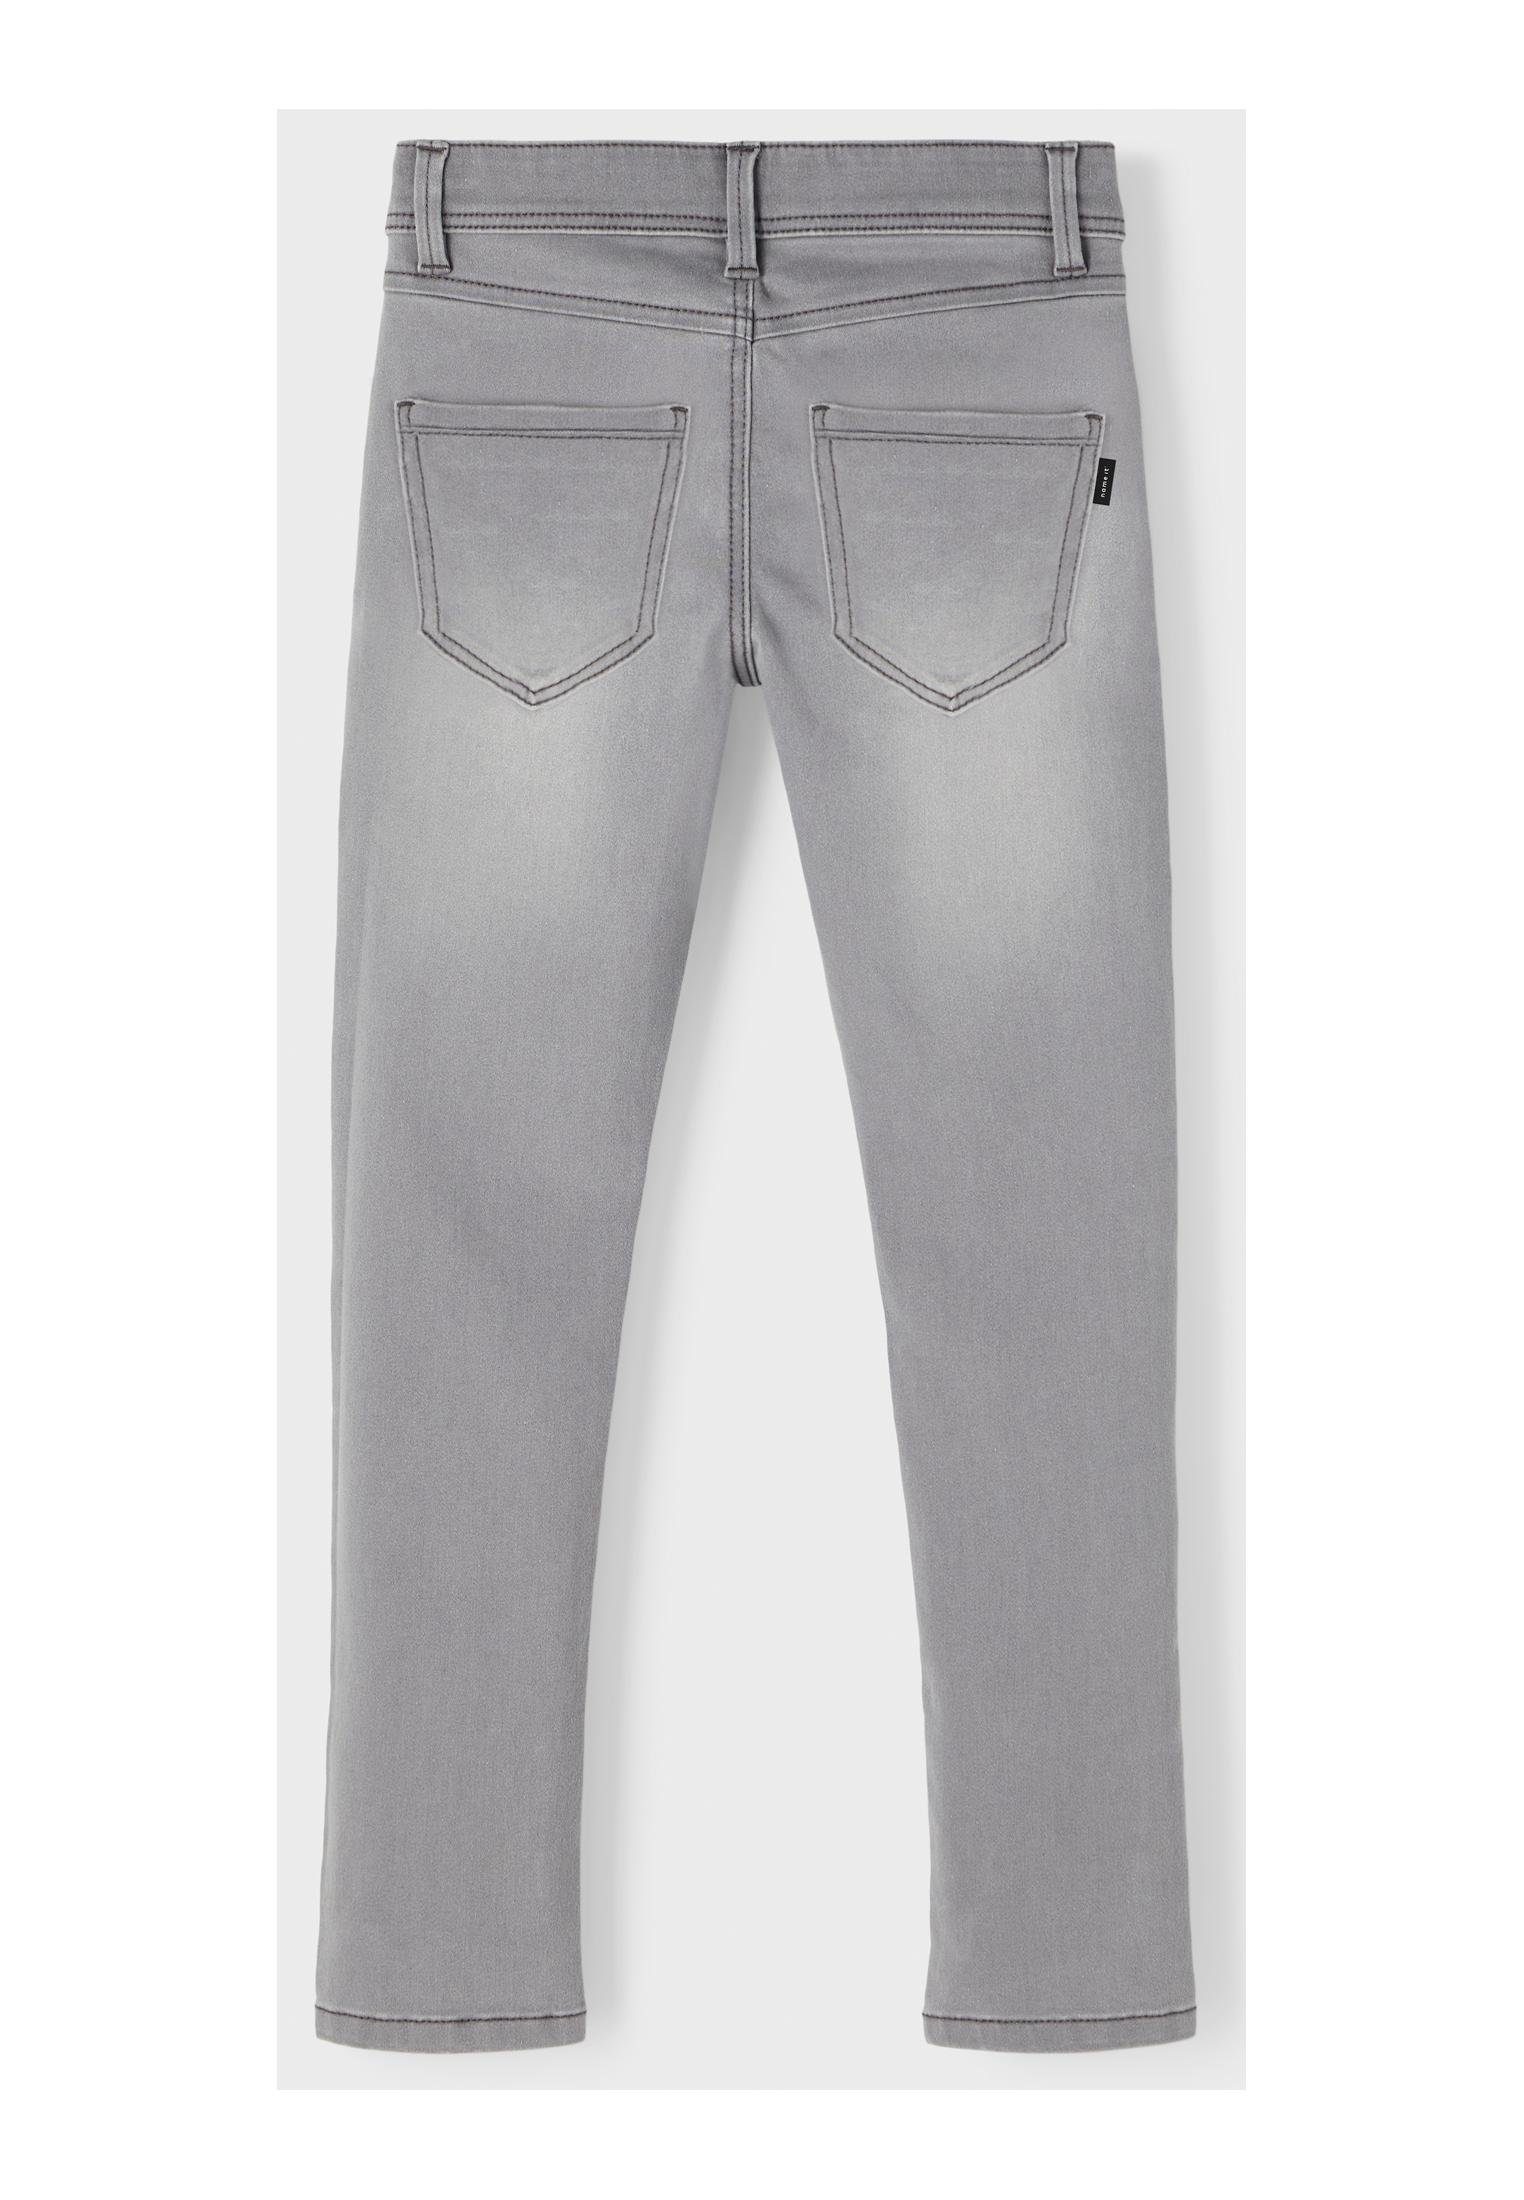 denim JEANS 2002-TX medium grey Skinny-fit-Jeans NKMSILAS It Name XSLIM